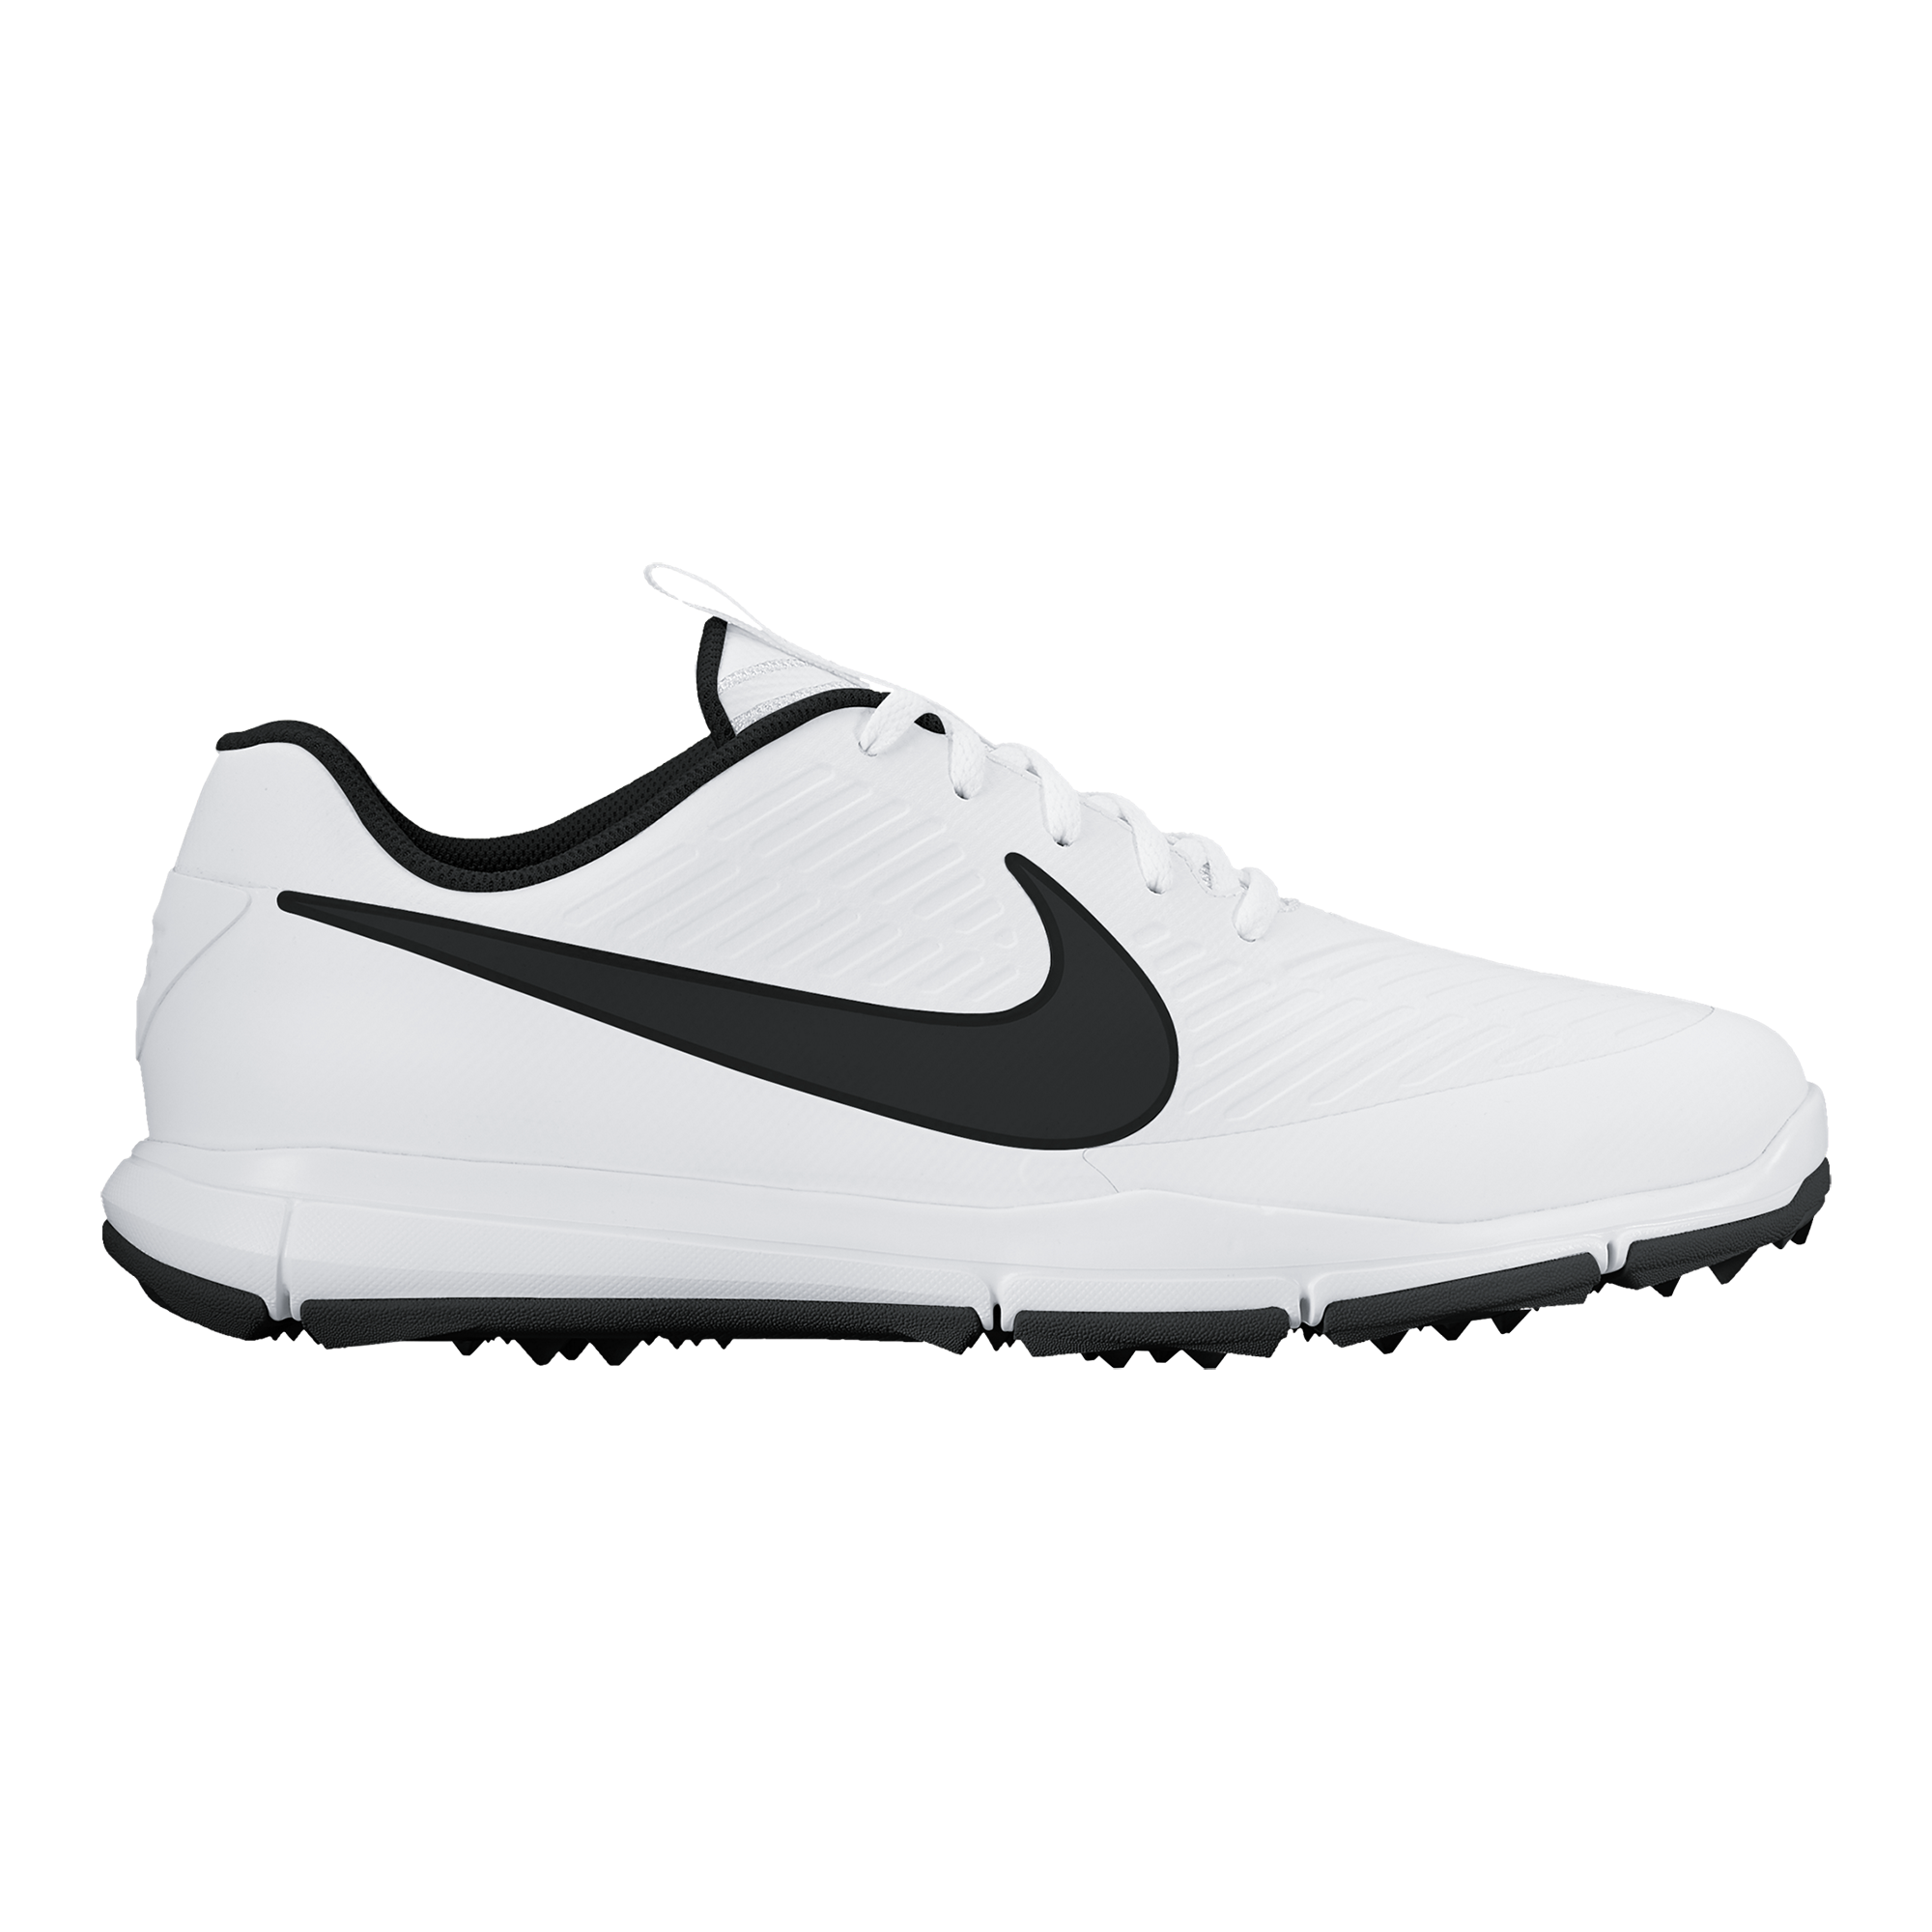 Nike Explorer 2 Men's Golf Shoe - White 